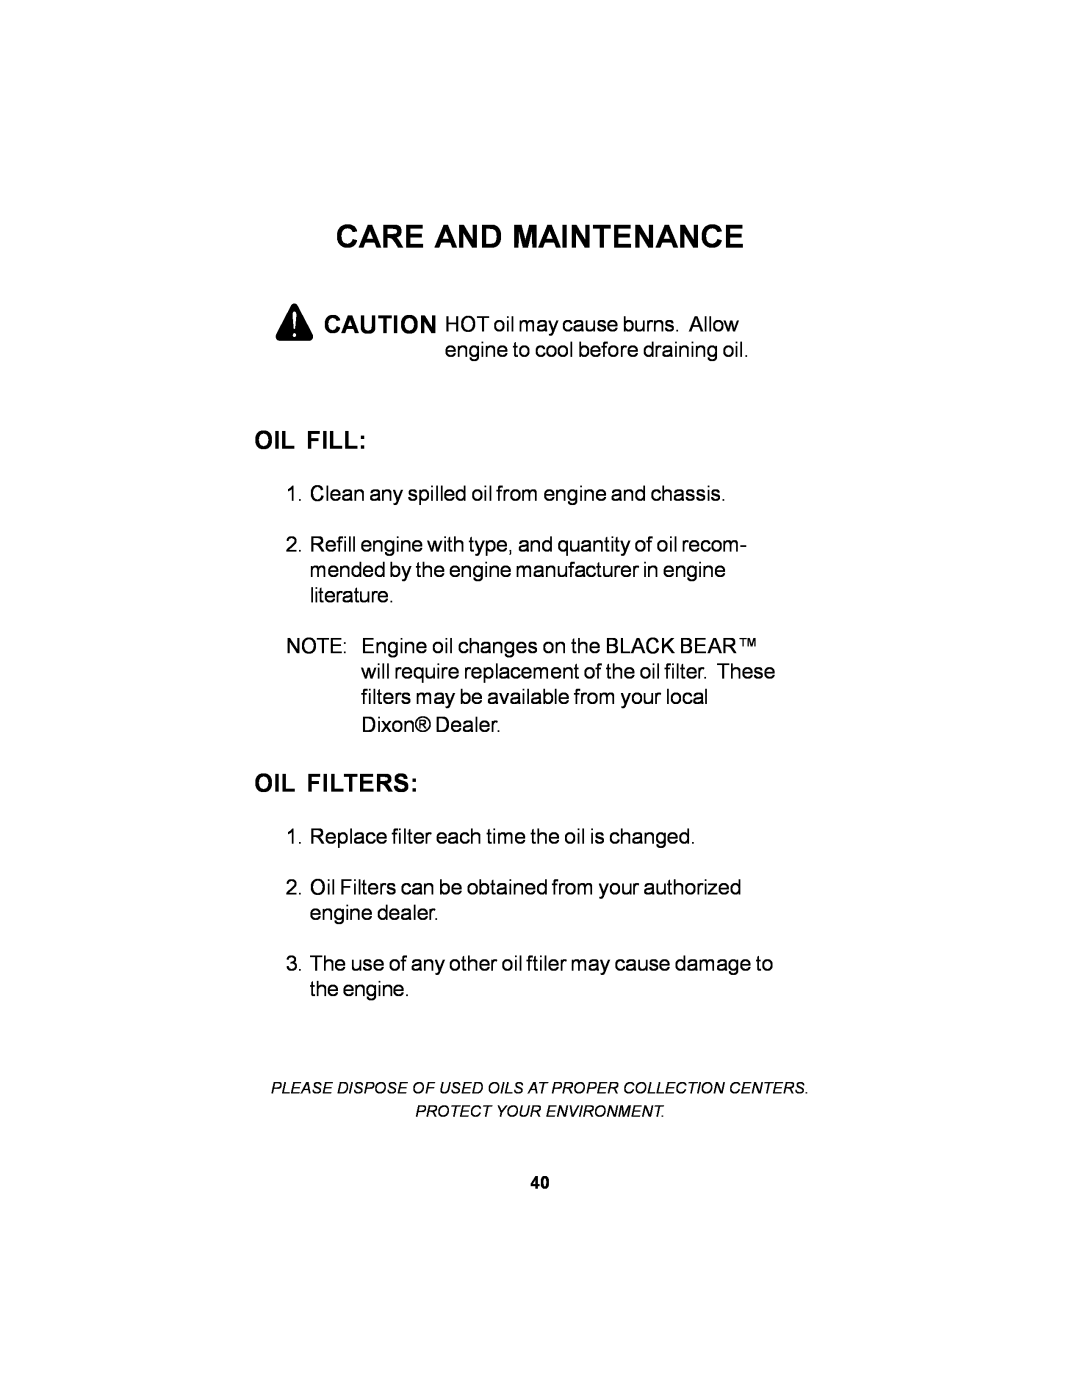 Dixon Black Bear manual Oil Fill, Oil Filters, Care And Maintenance 